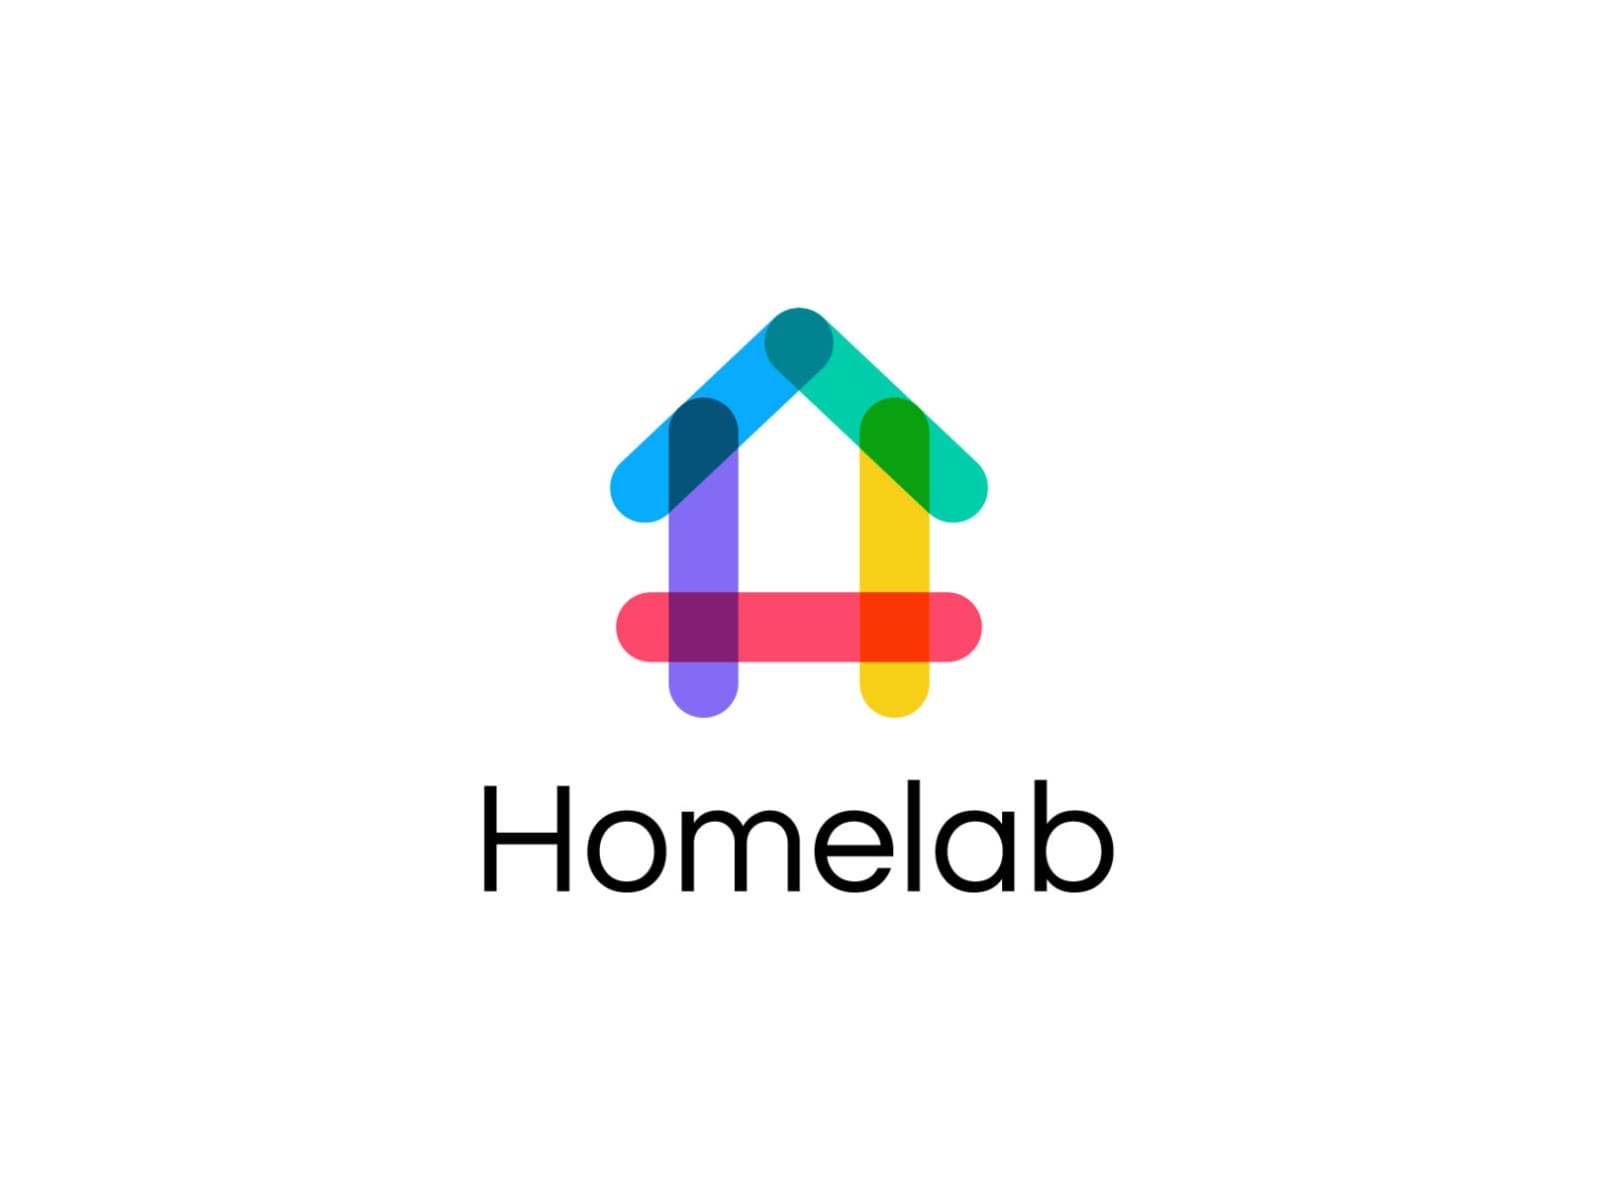 Your Homelab